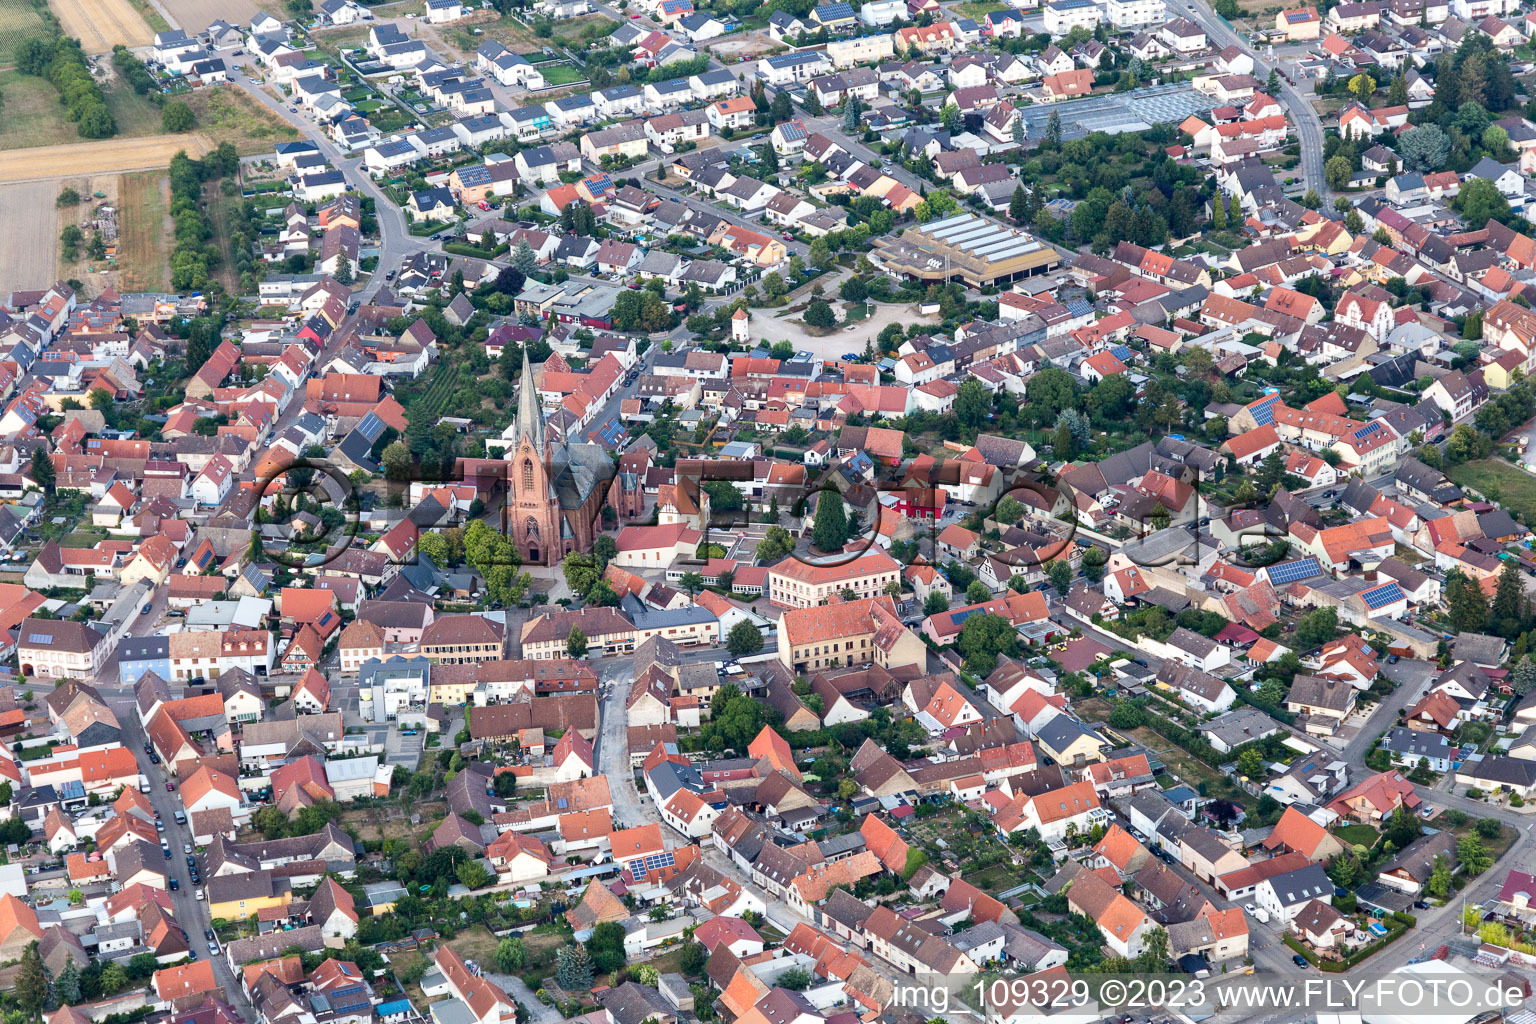 Drone recording of District Rheinsheim in Philippsburg in the state Baden-Wuerttemberg, Germany